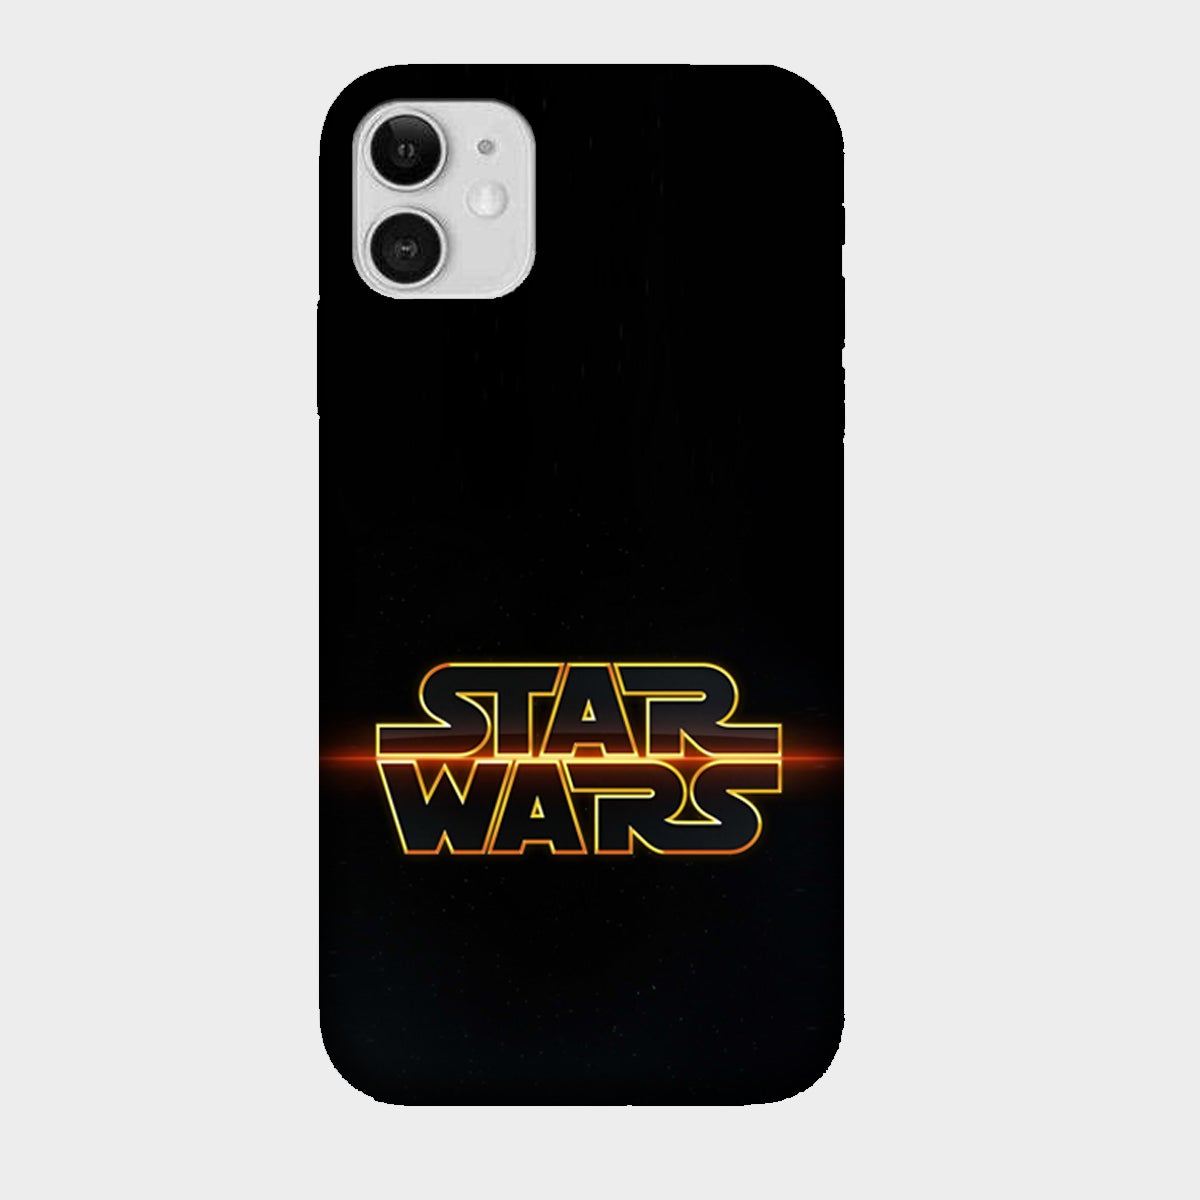 Star Wars - Golden - Mobile Phone Cover - Hard Case